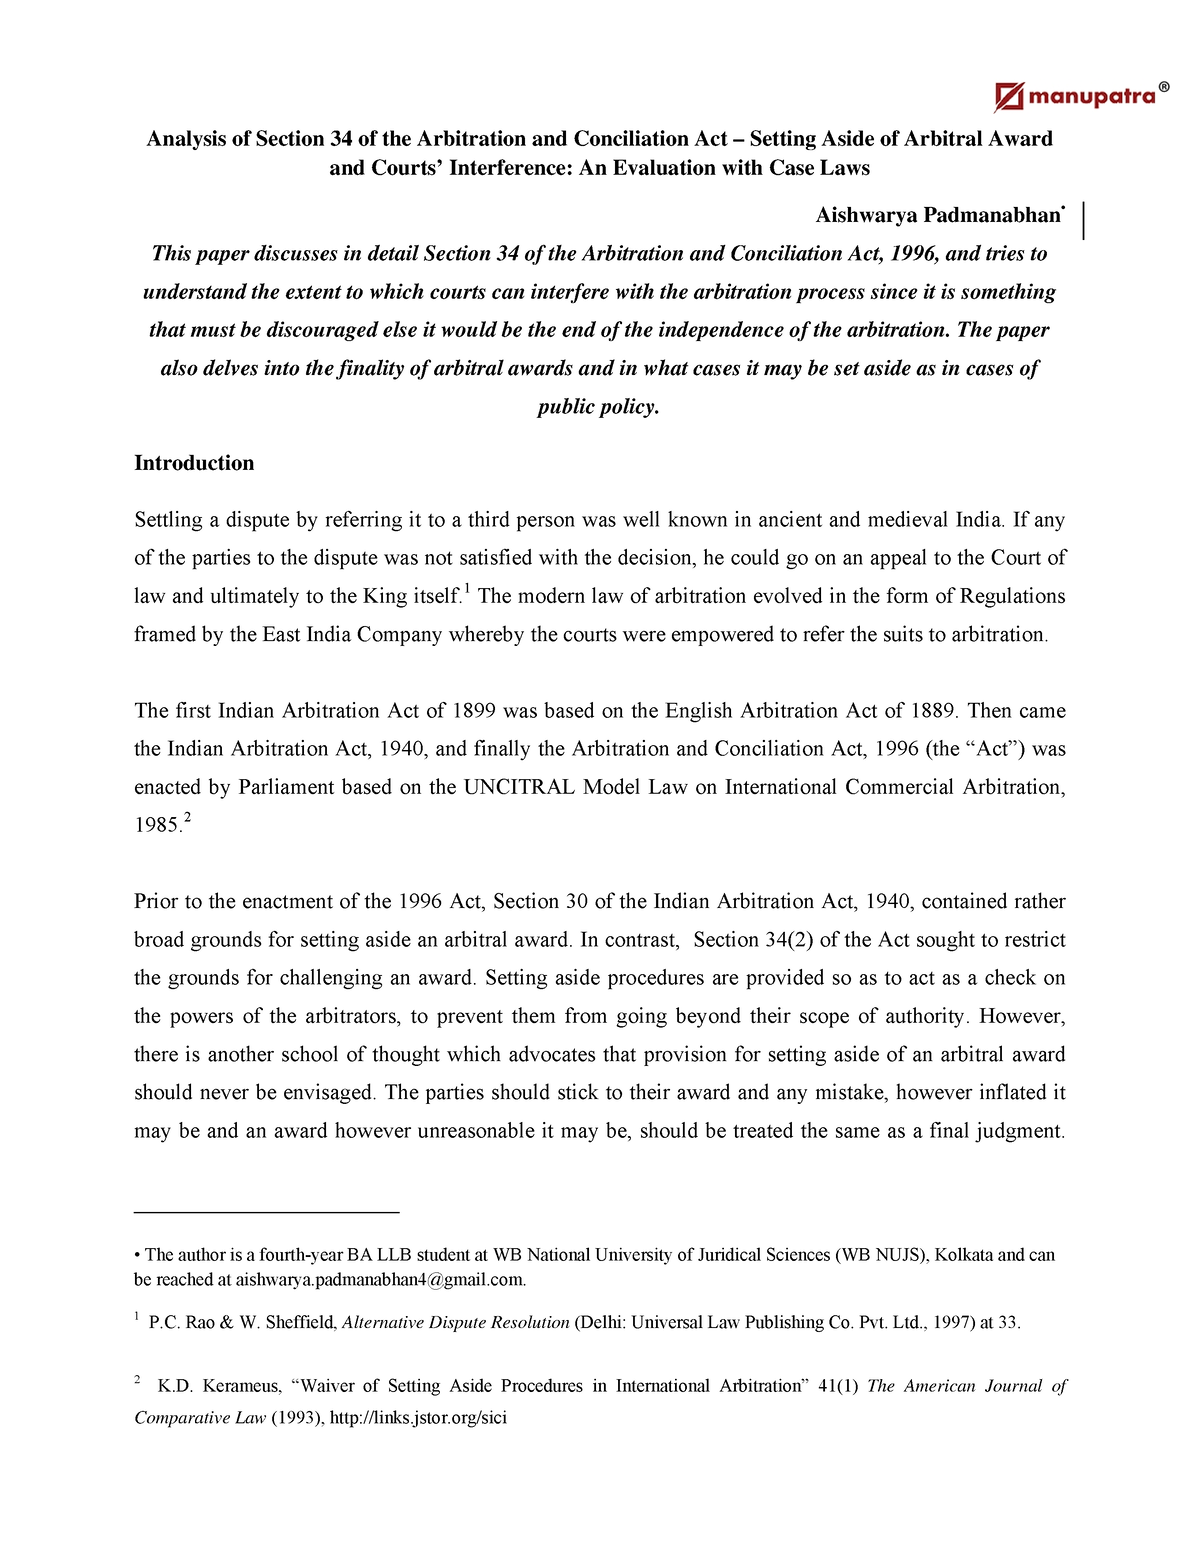 thesis on arbitration pdf